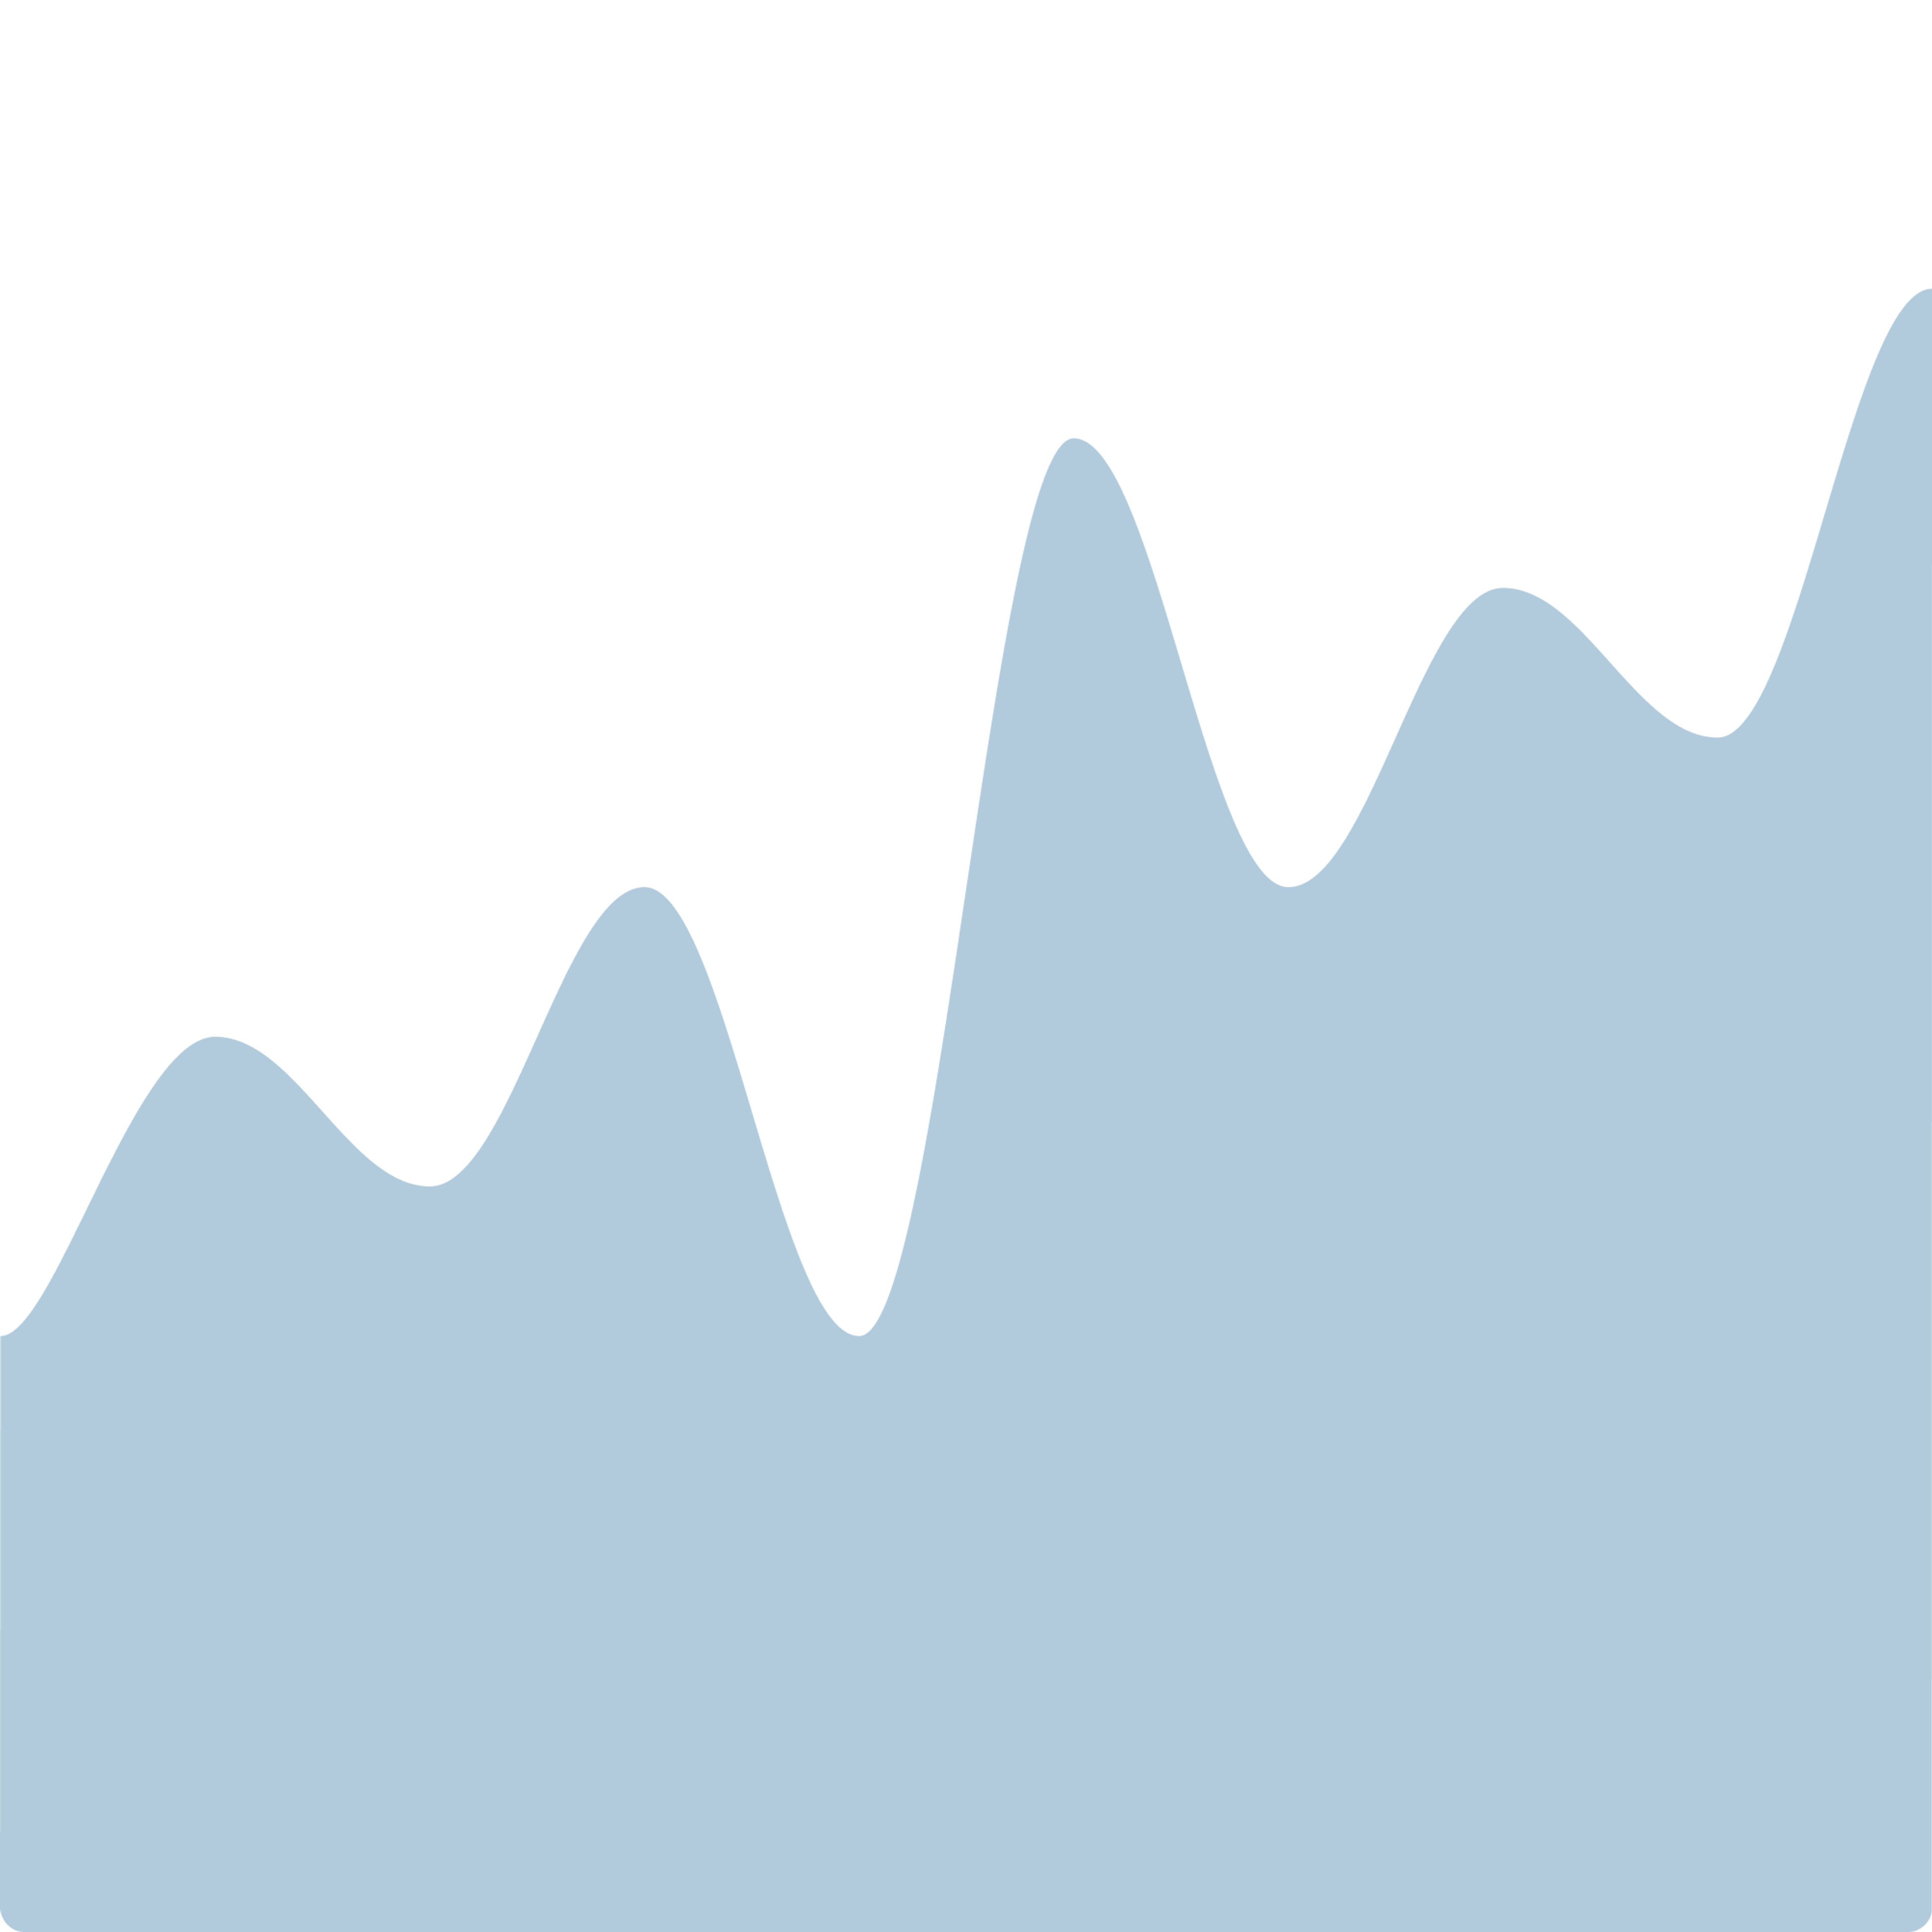 A light blue graph on a transparent background.